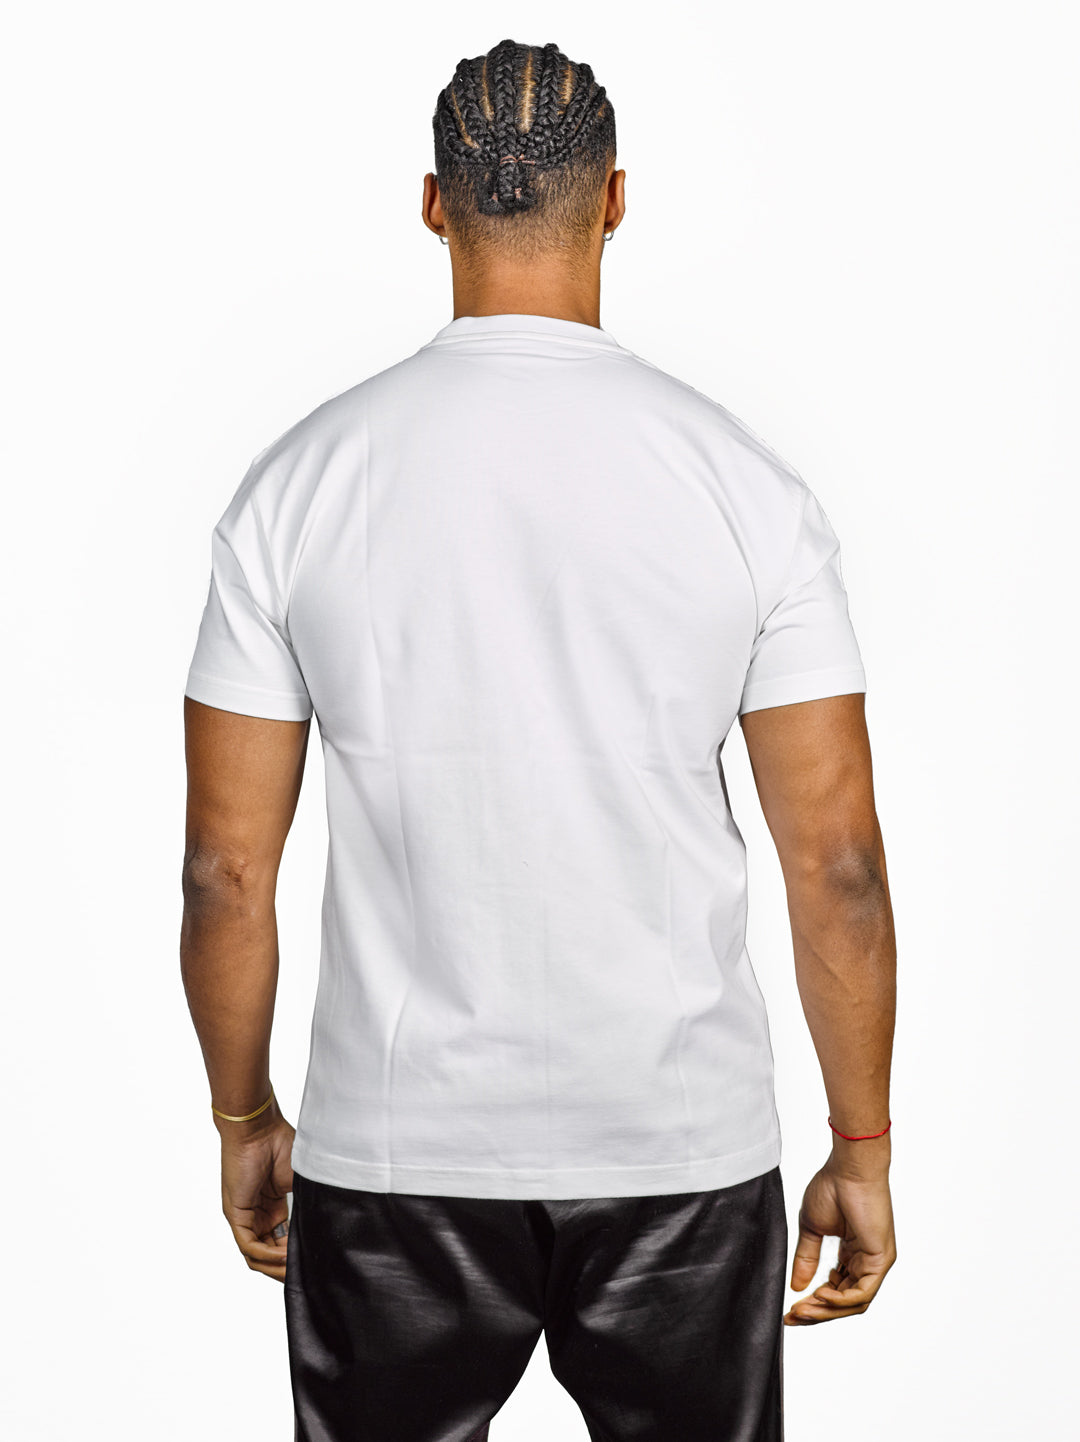 Exetees Plain Regular Round Neck T-Shirt - White